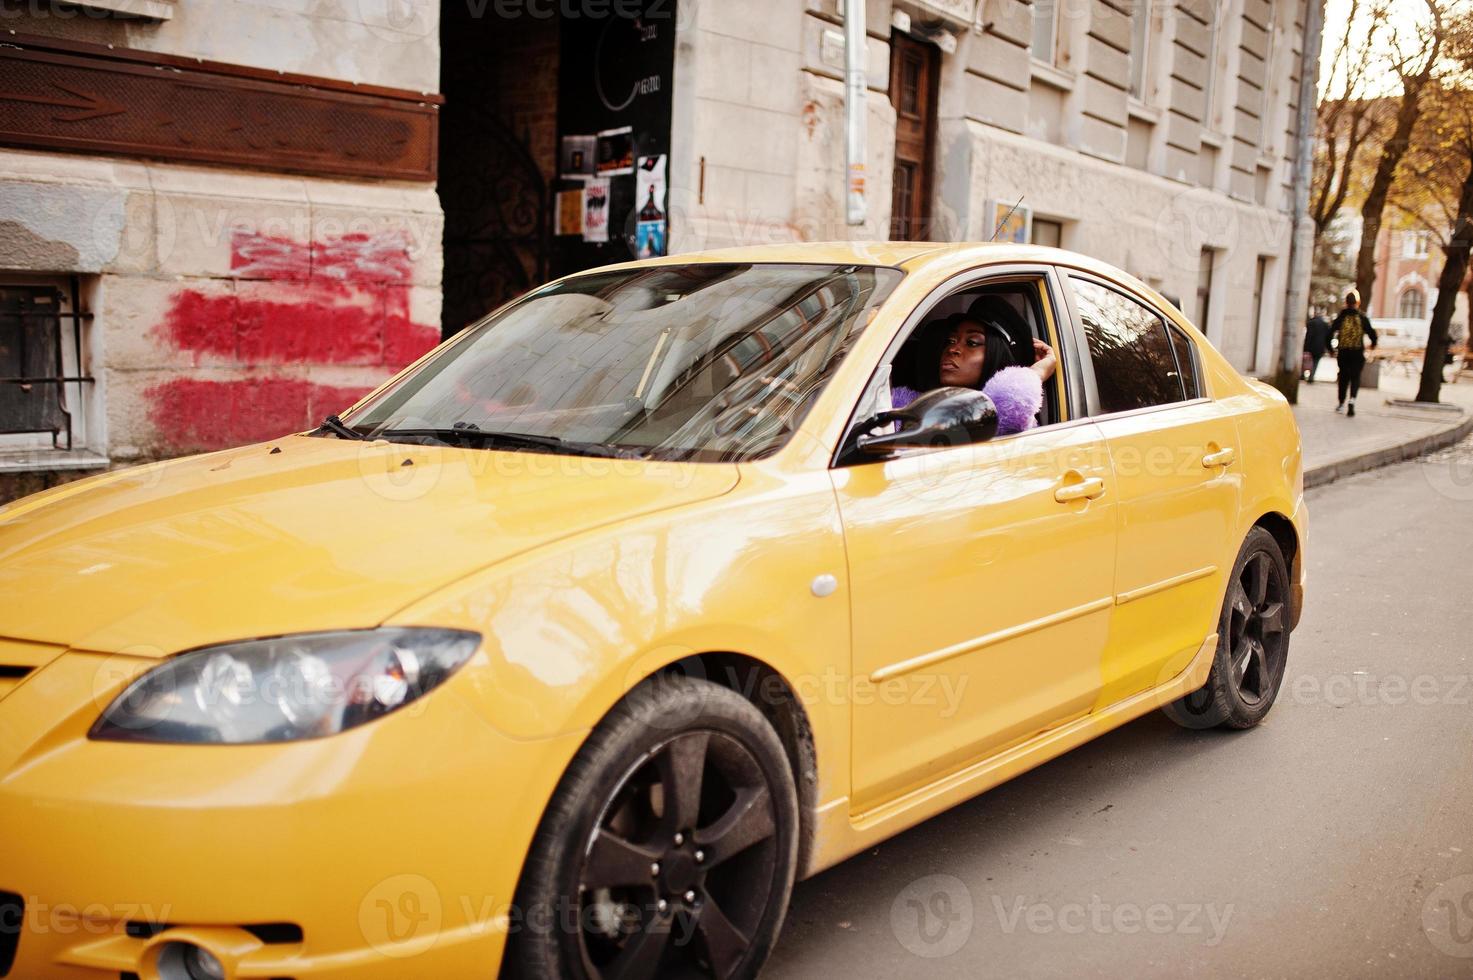 Afro-Amerikaanse vrouw op violette jurk en pet poseerde bij gele auto. foto